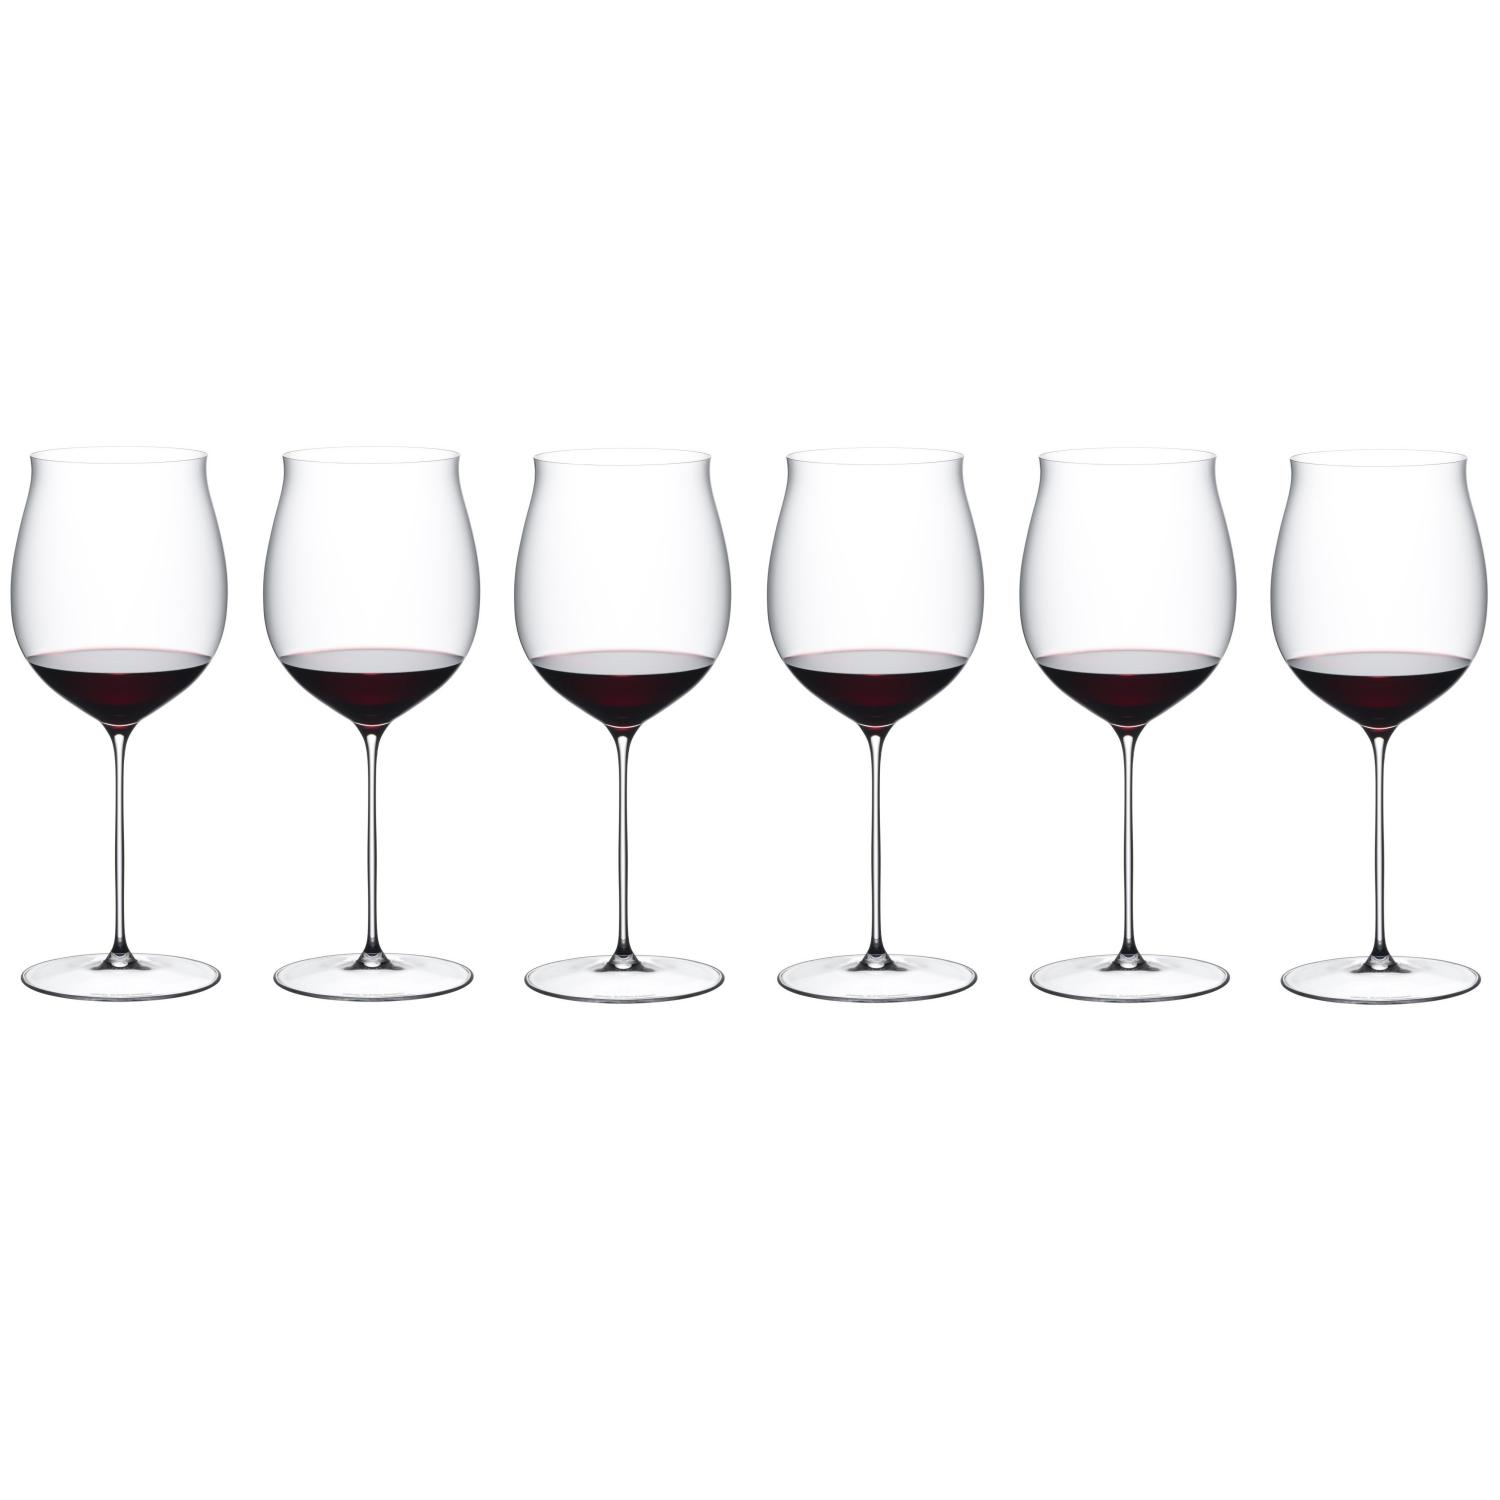 6 бокалов для красного вина RIEDEL Superleggero Party Set Burgundy Grand Cru 1022 мл